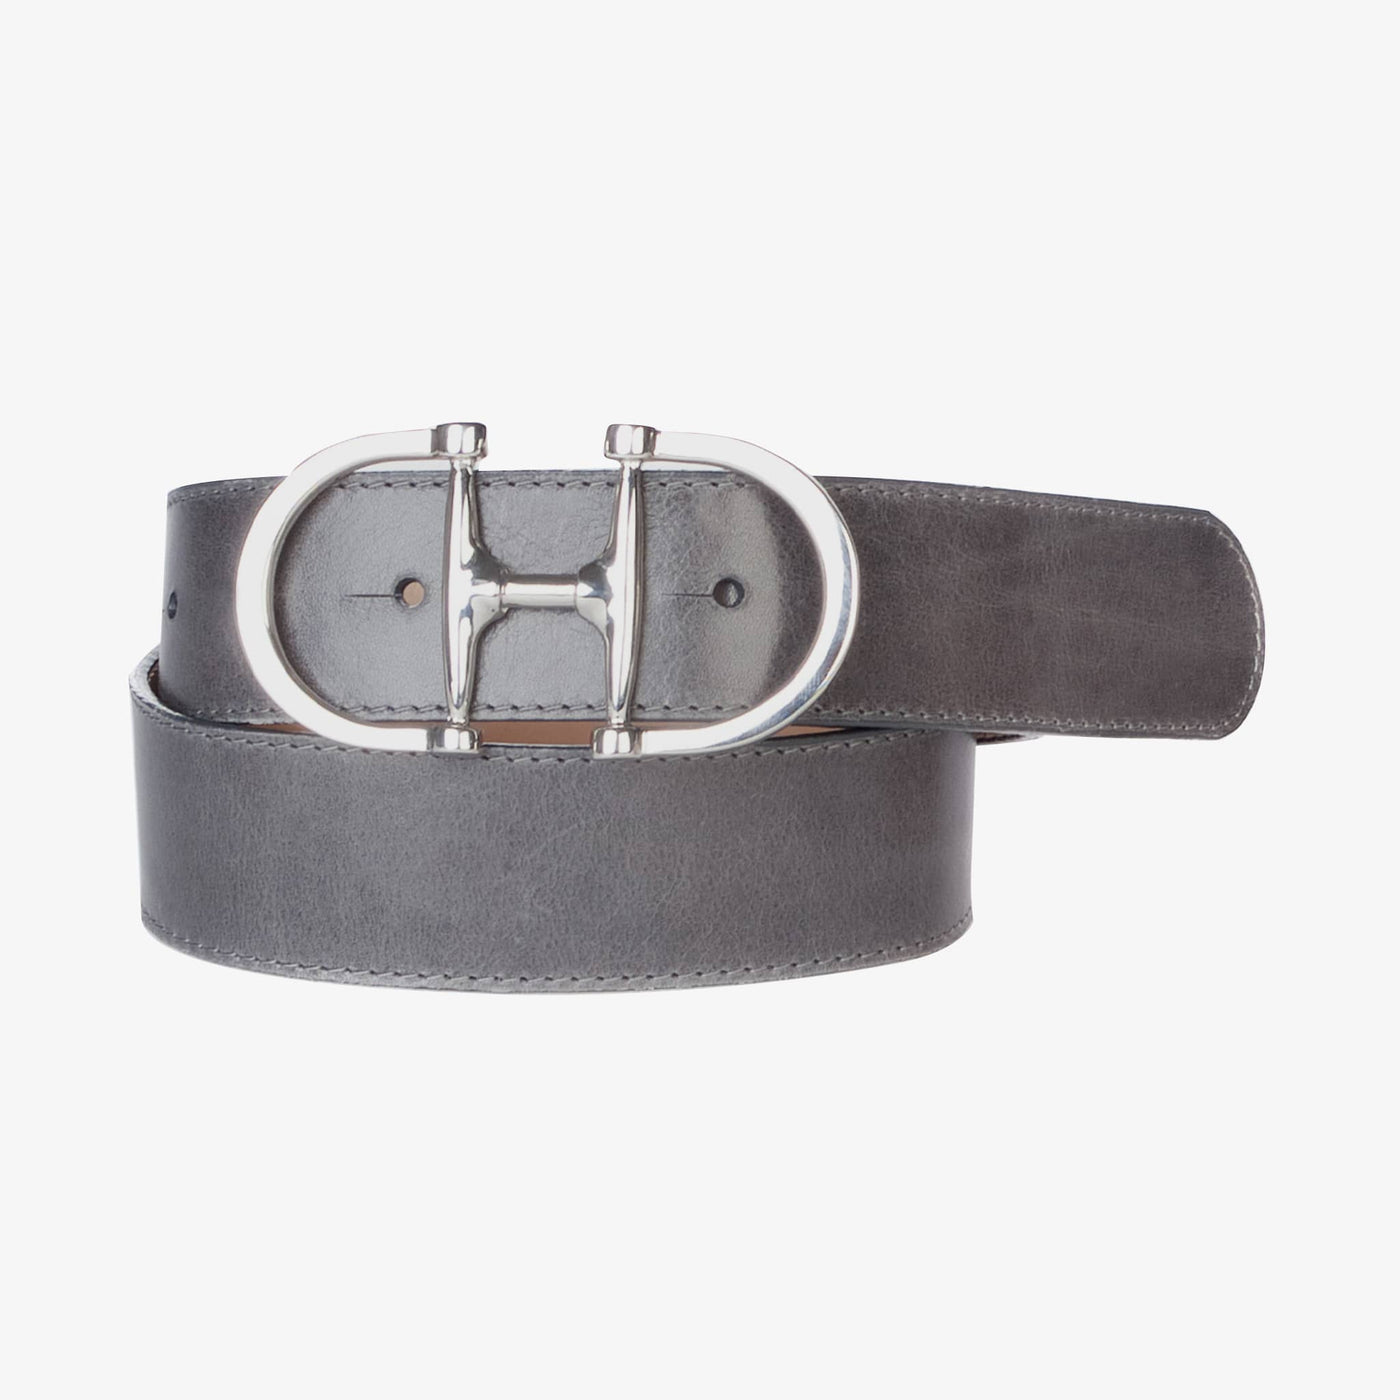 Kasi Nappa BRAVE Leather Belt